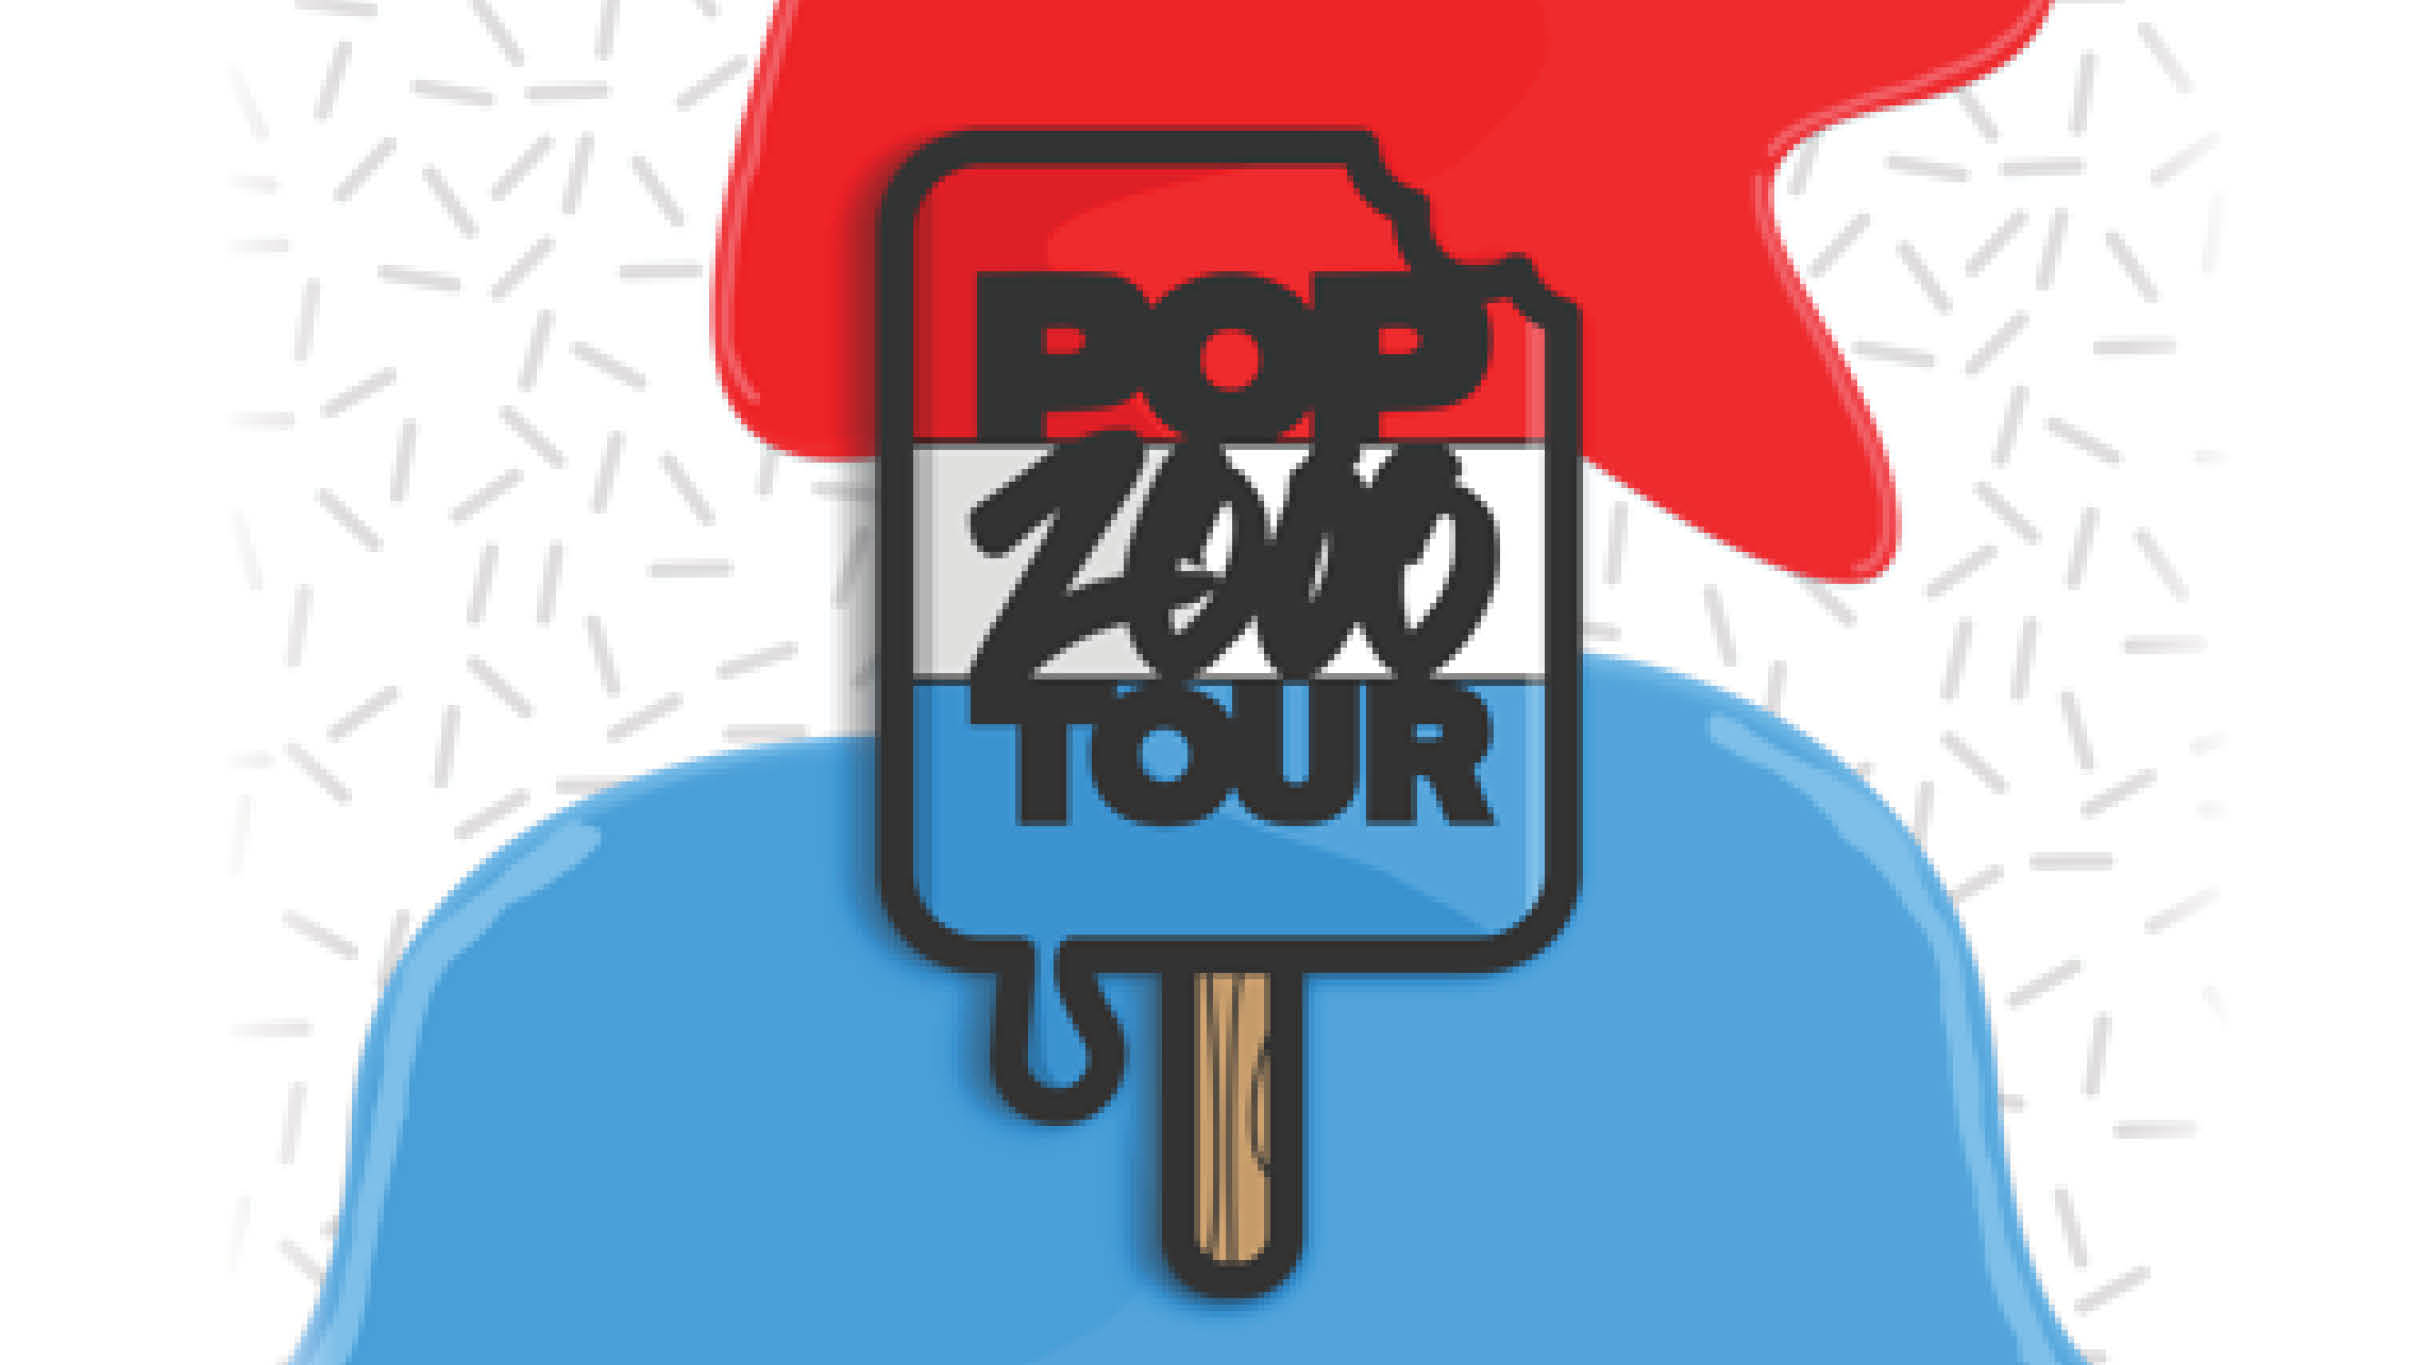 POP 2000 Tour